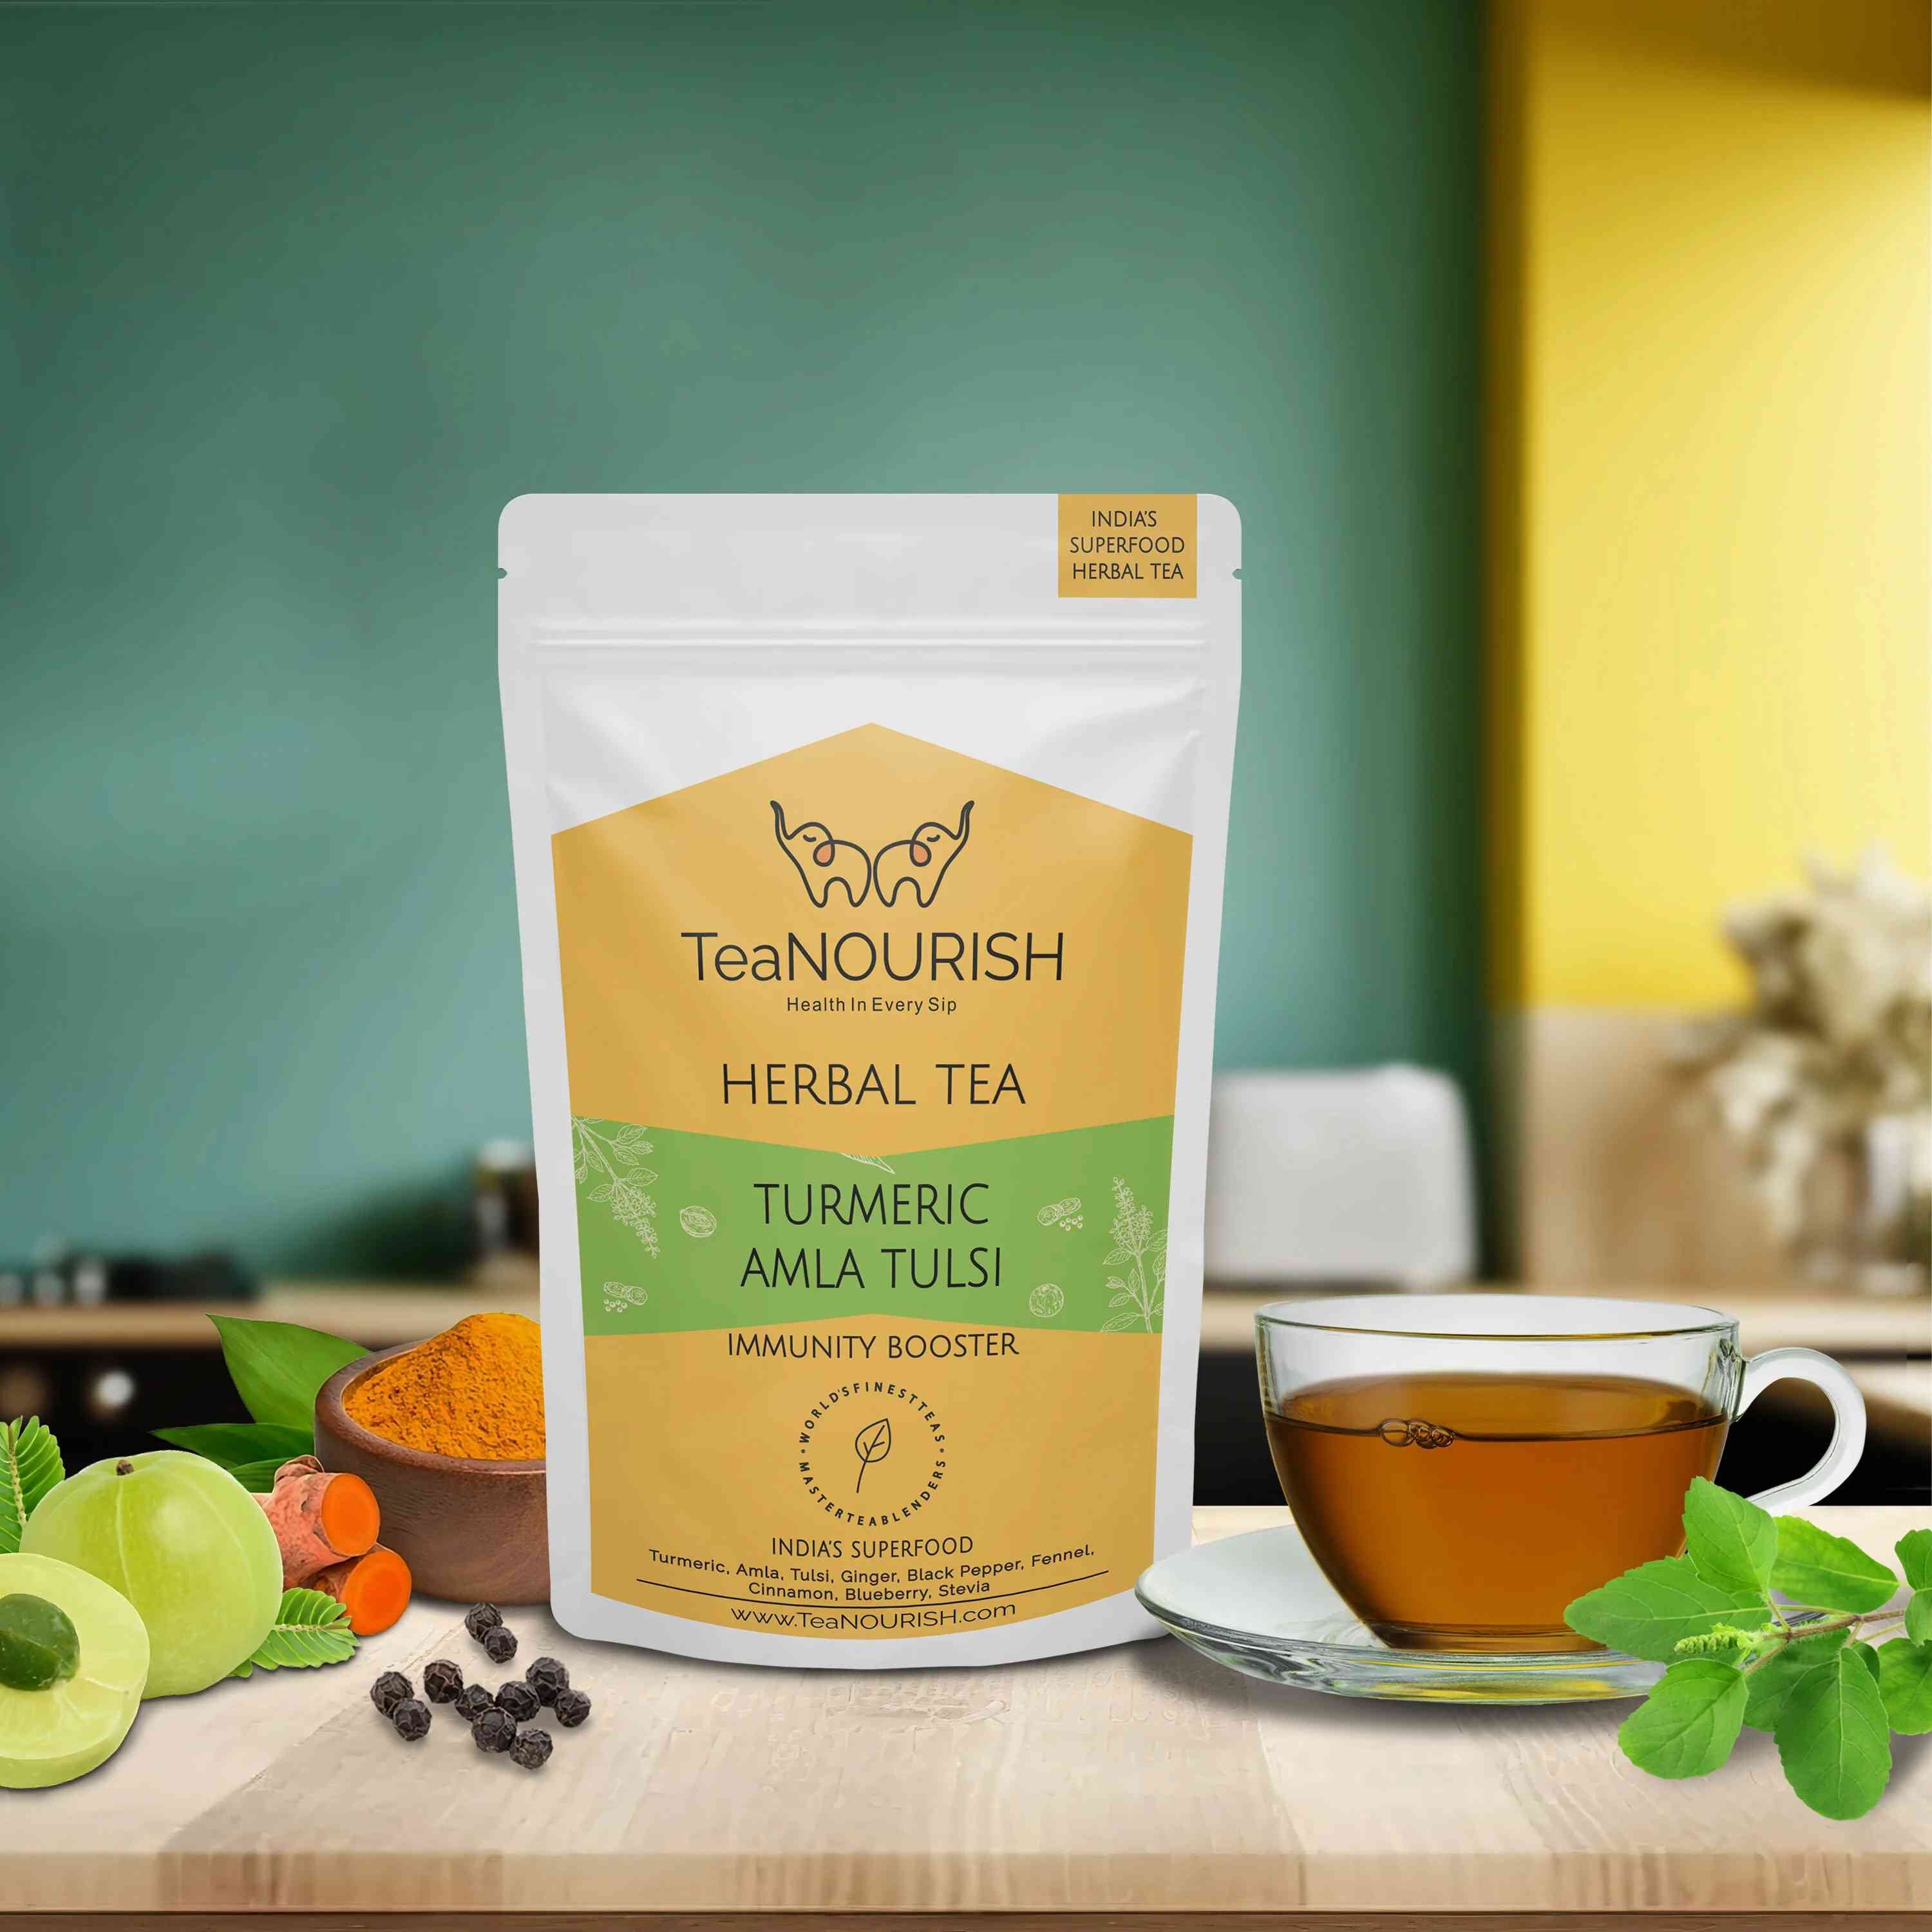 Turmeric Amla Tulsi Herbal Tea Product Picture